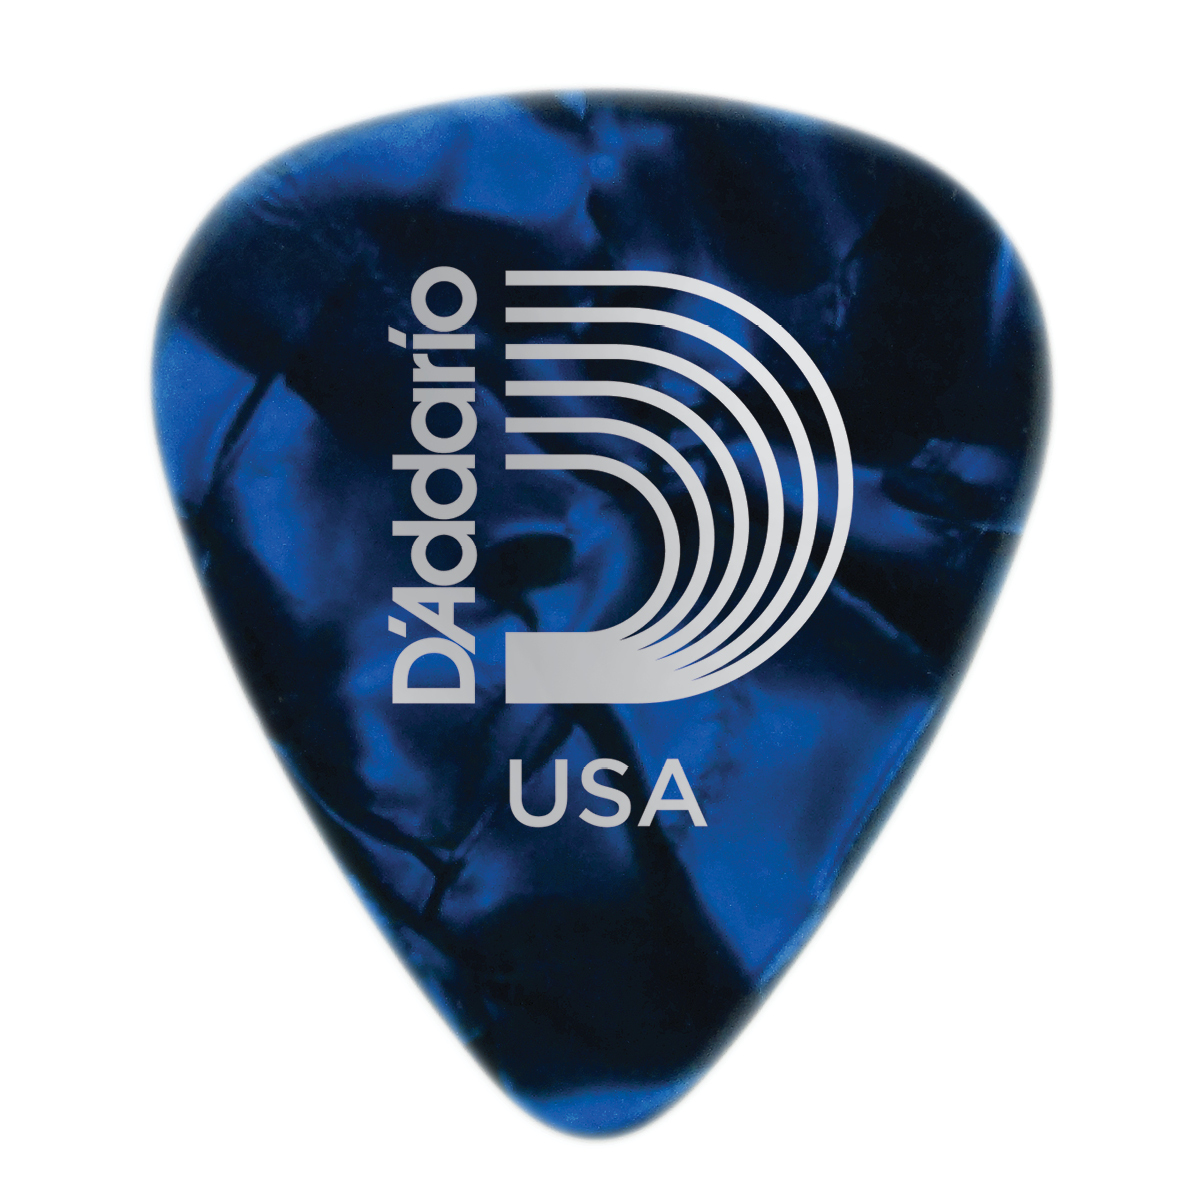 D'Addario Blue Pearl Celluloid Guitar Pick, Light 